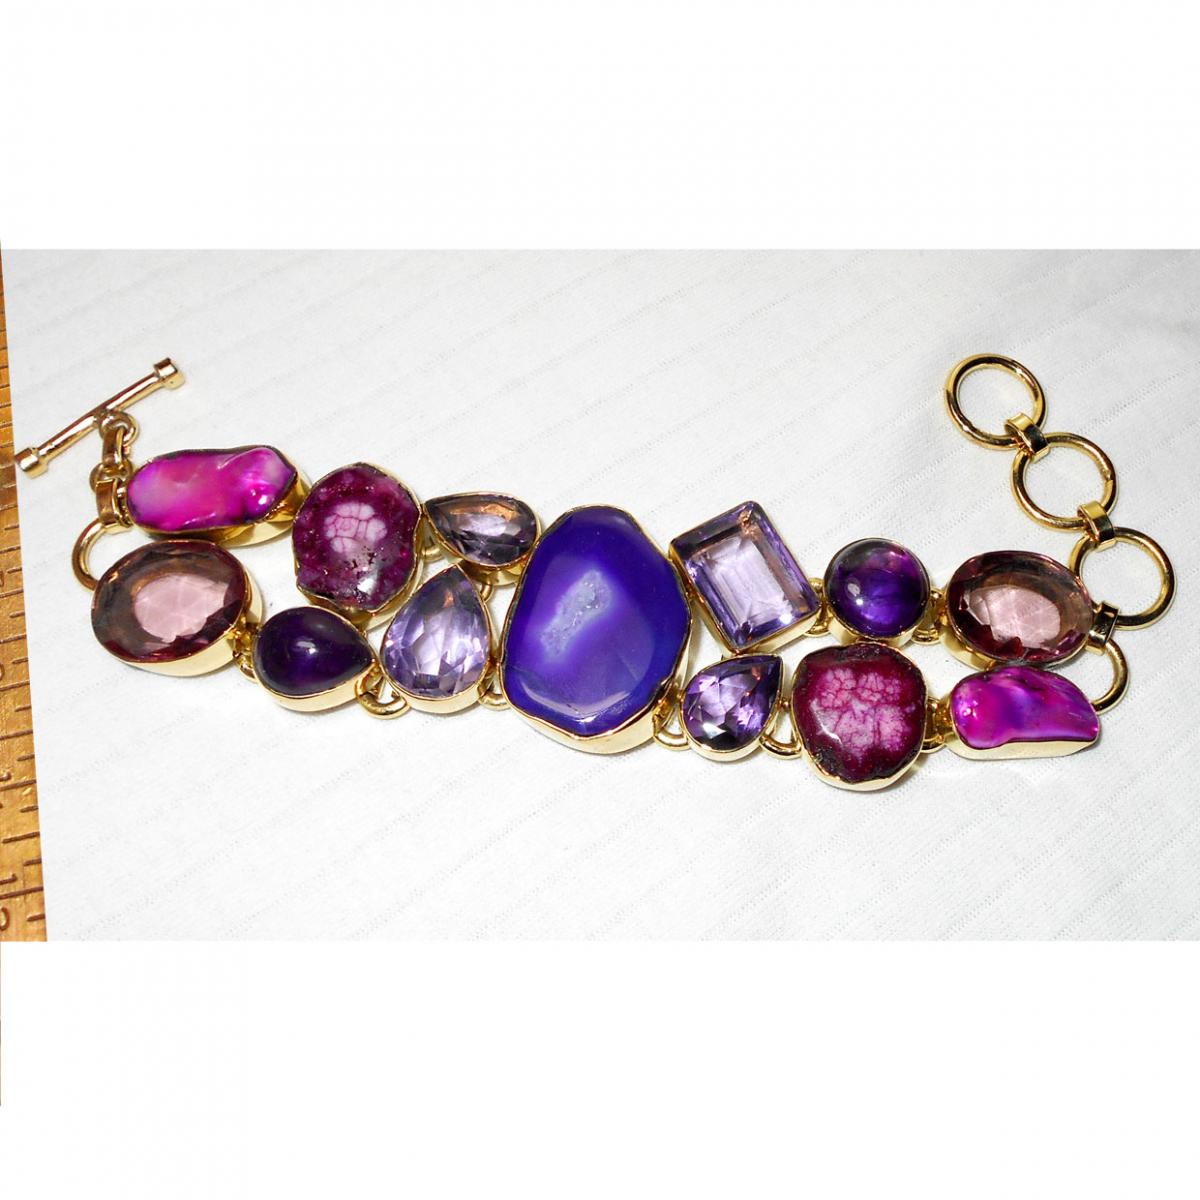 Biwa pearl, Amethyst, Drusy, Hydro glass C - CLB998- Royal fashion Cluster Bracelets with Brass wholesale